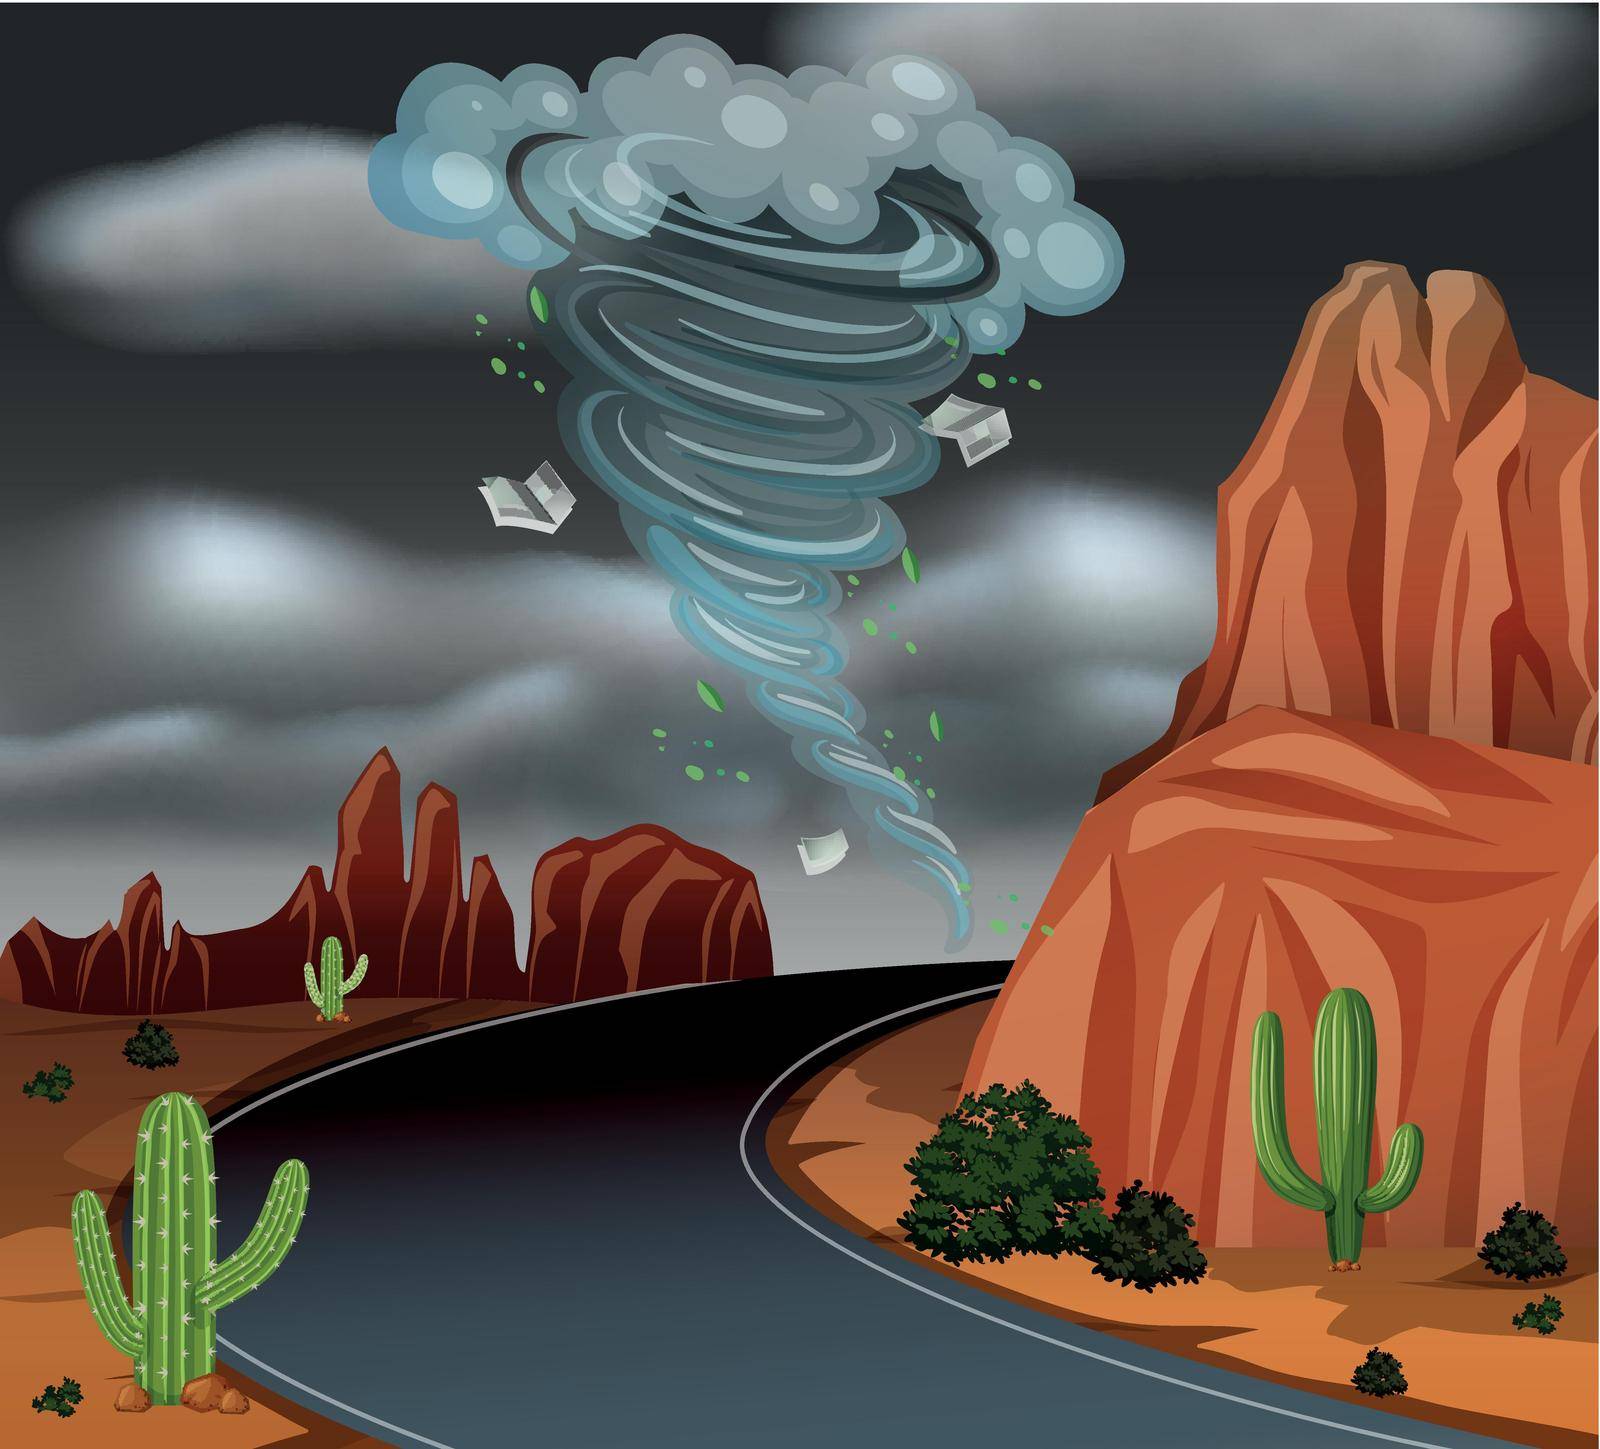 Cyclone storm desert scene illustration